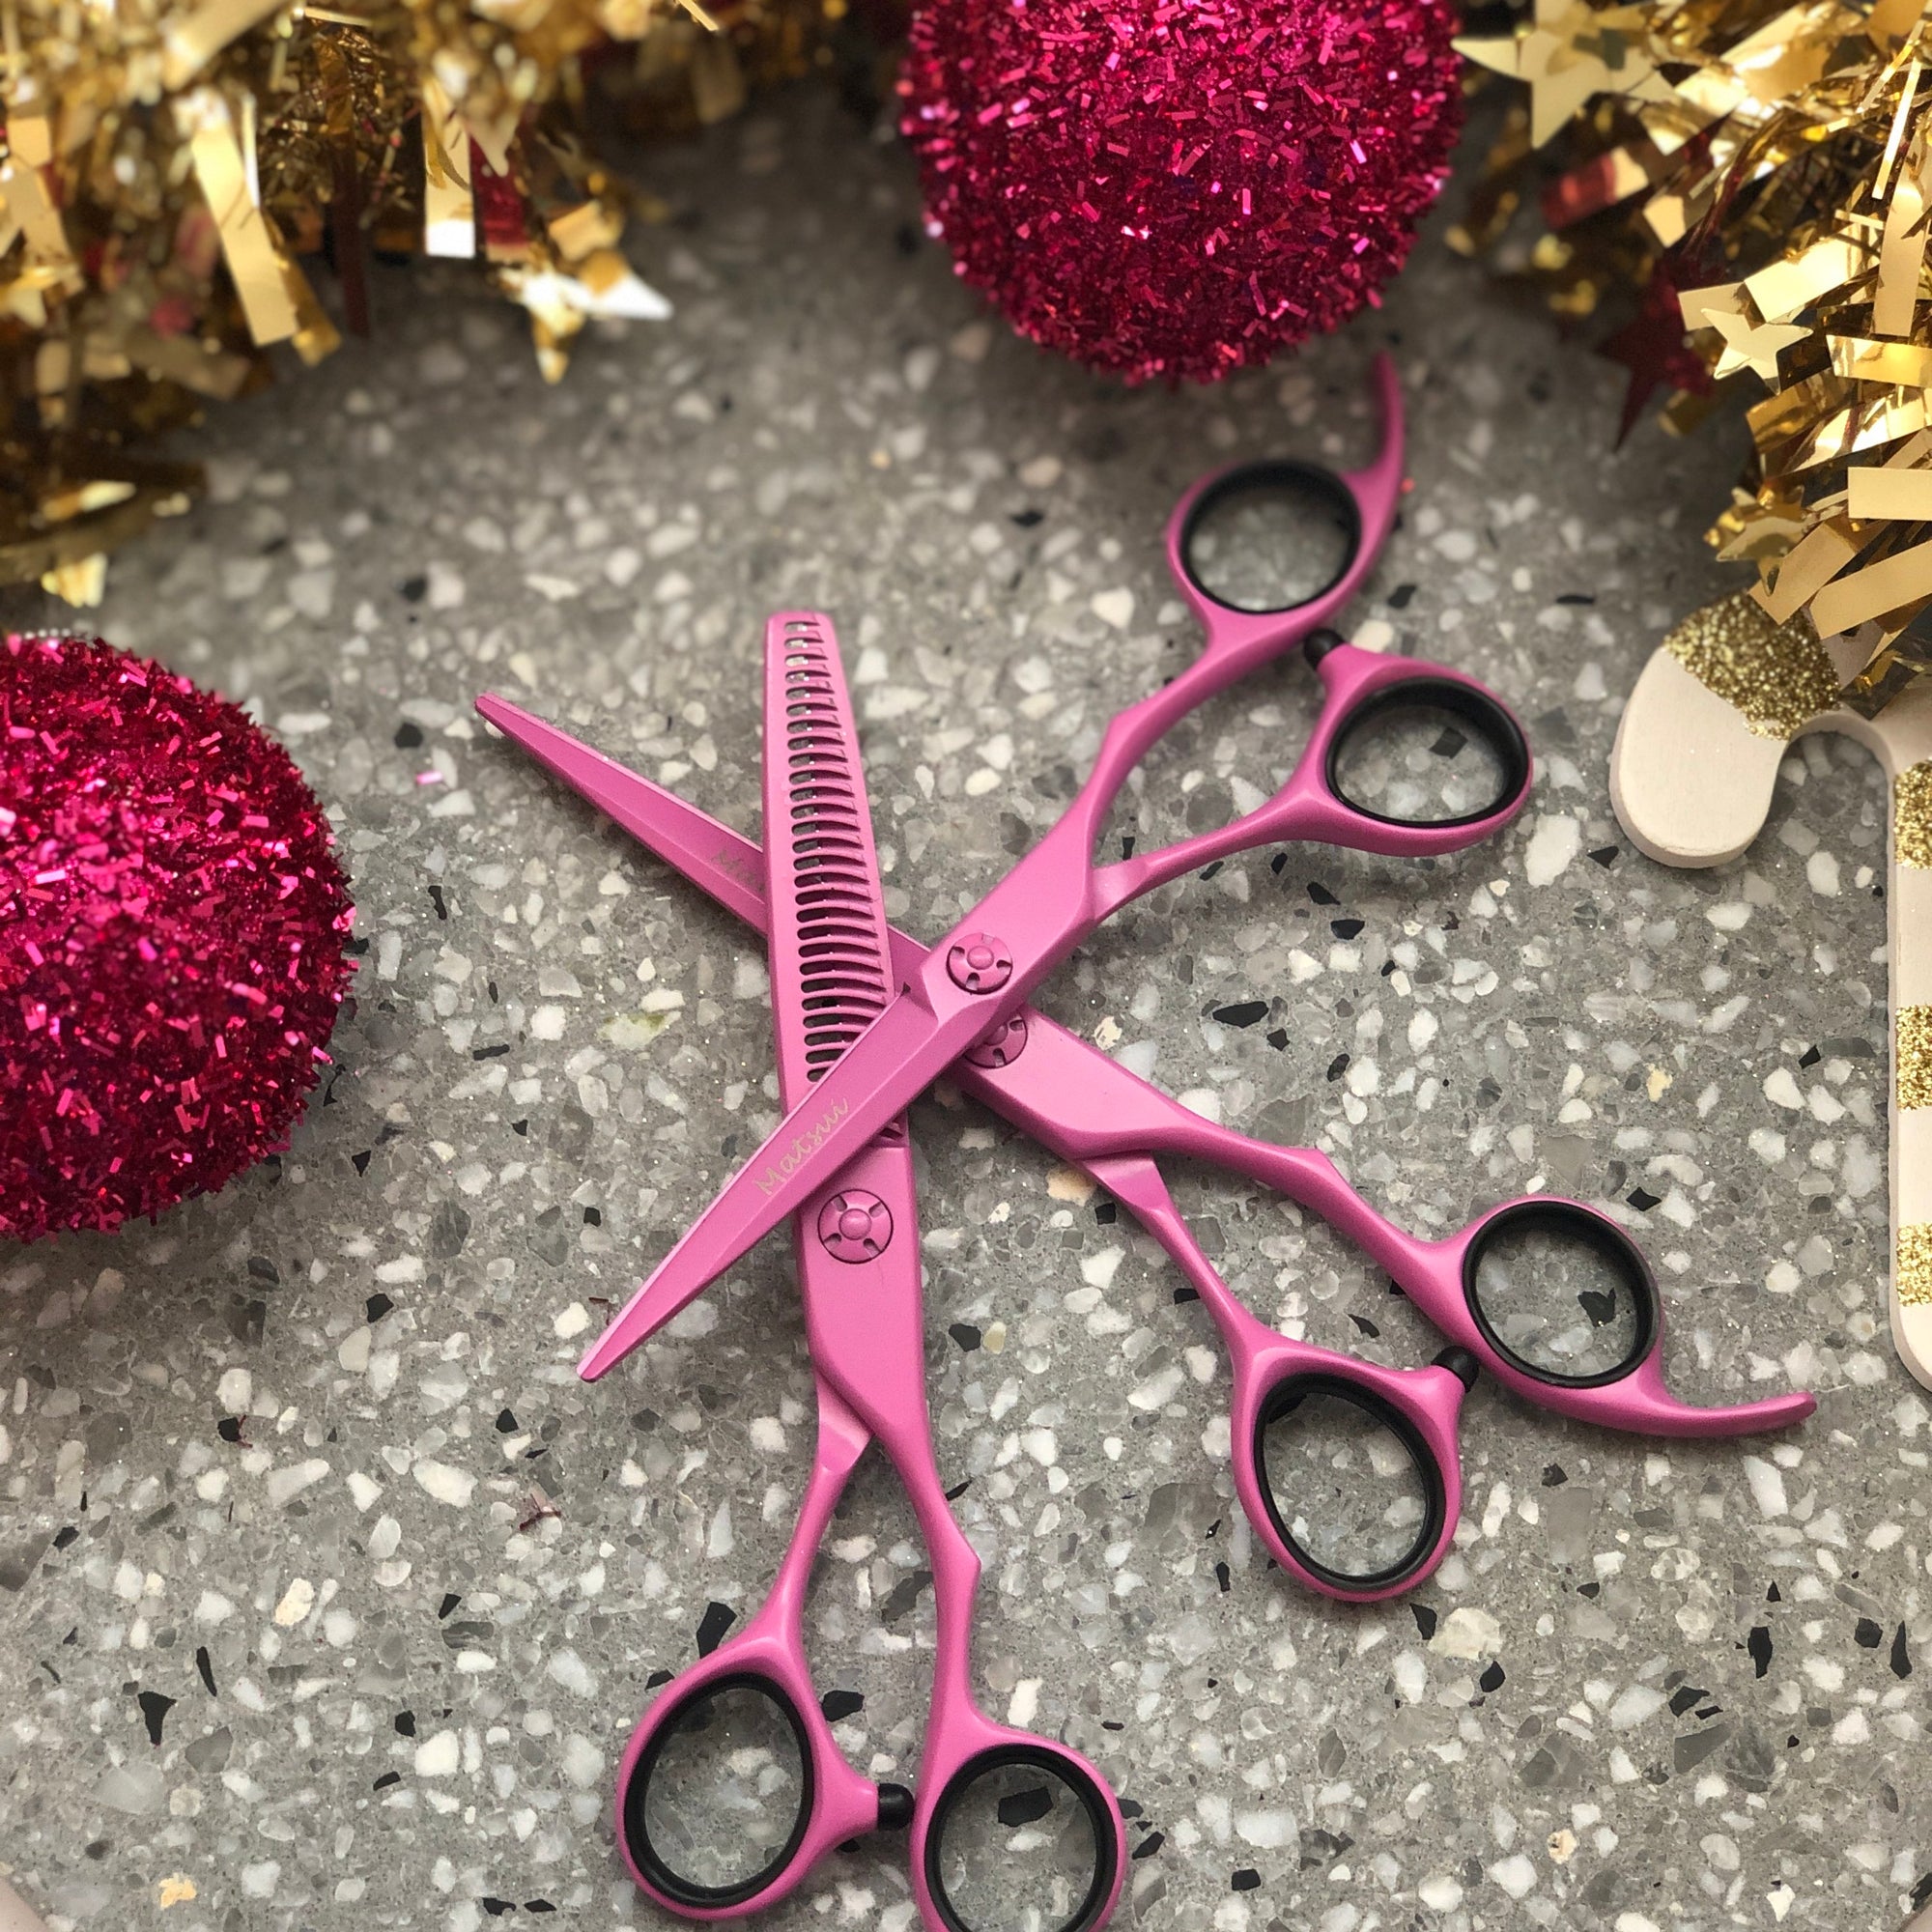 1st Day of Christmas: Matsui 2019 Neon Pink Offset Scissor Set